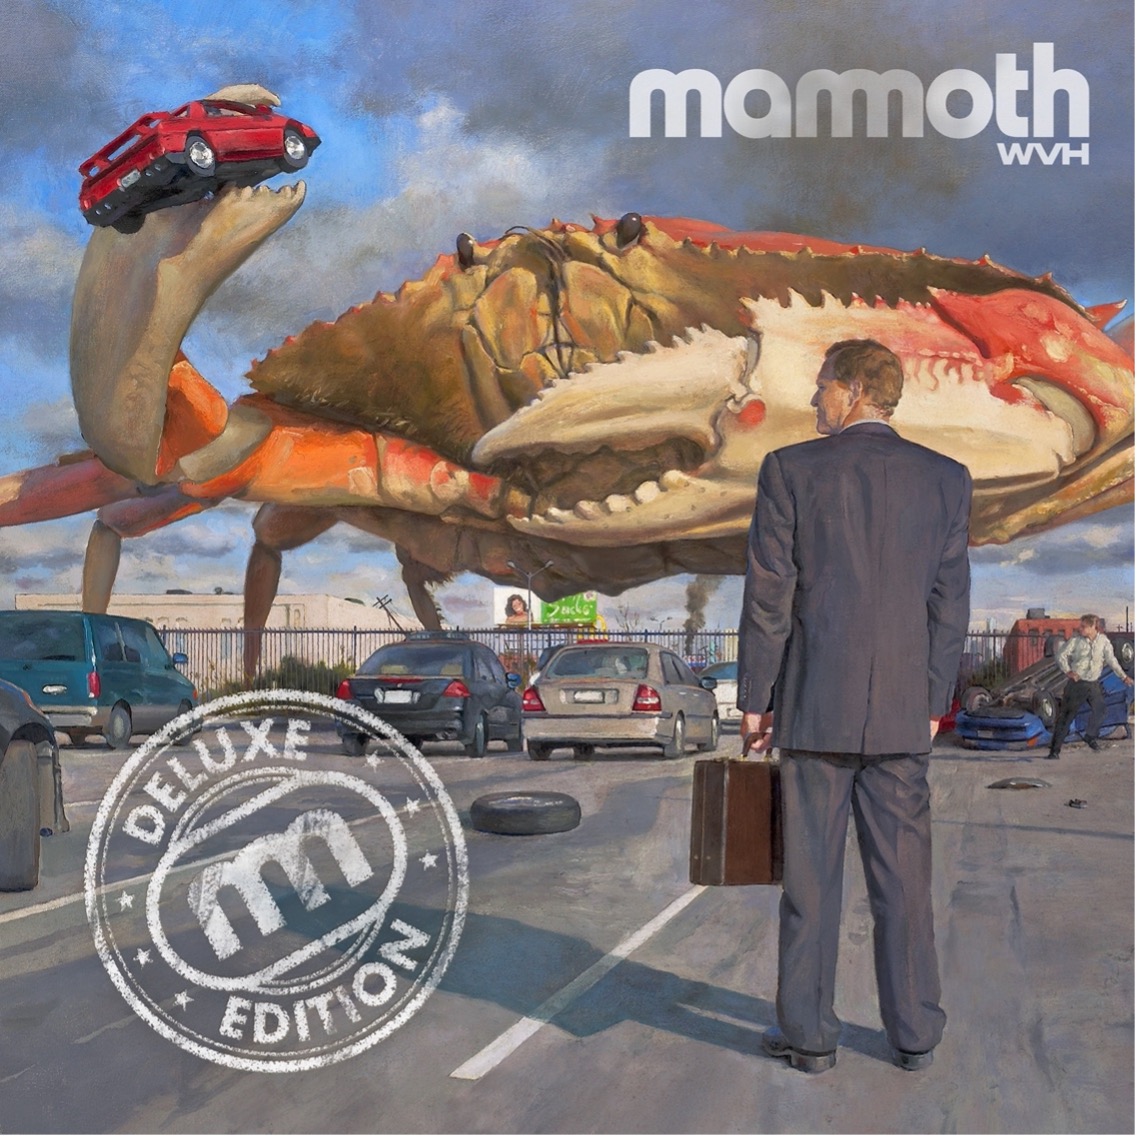 mammoth-wvh-kuendigen-digital-deluxe-edition-des-debuetalbums-fuer-november-an